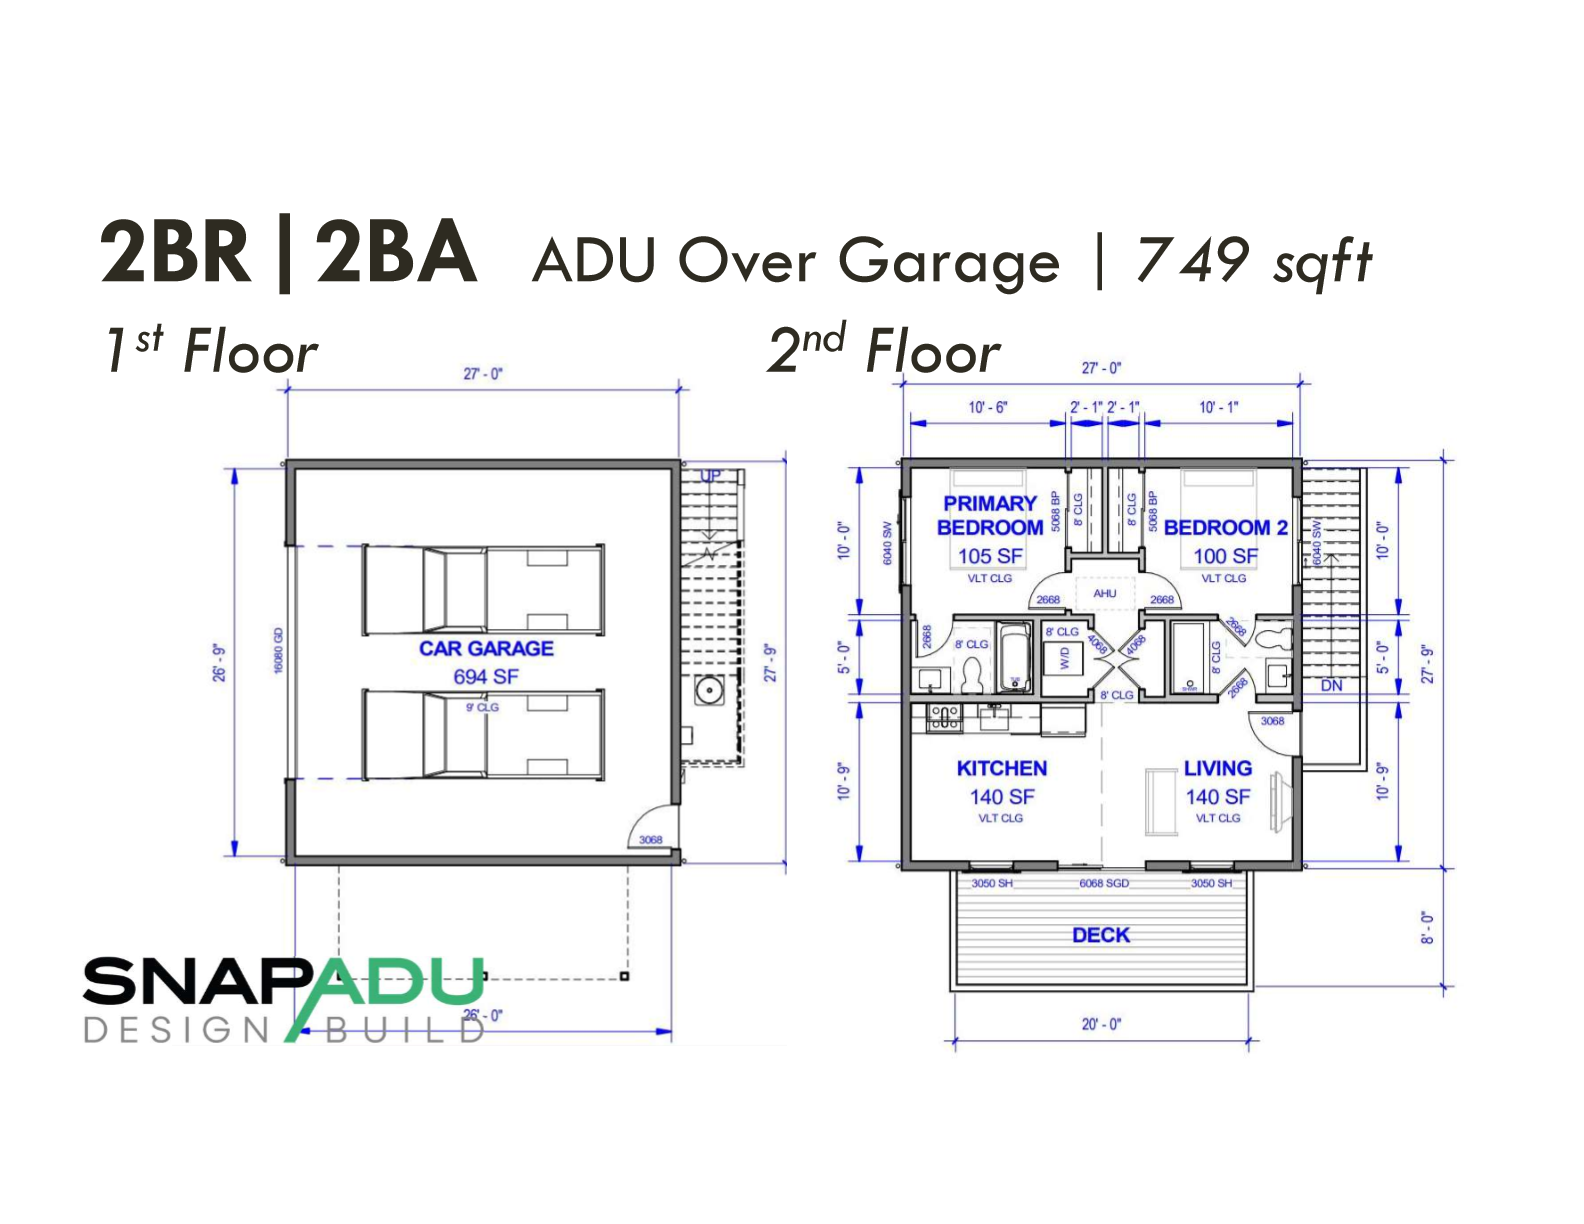 2-Story-Snap-ADU-Carriage-House-Floor-Plan-2BR-2BA-749-SF-36x31-Two-Car-Garage